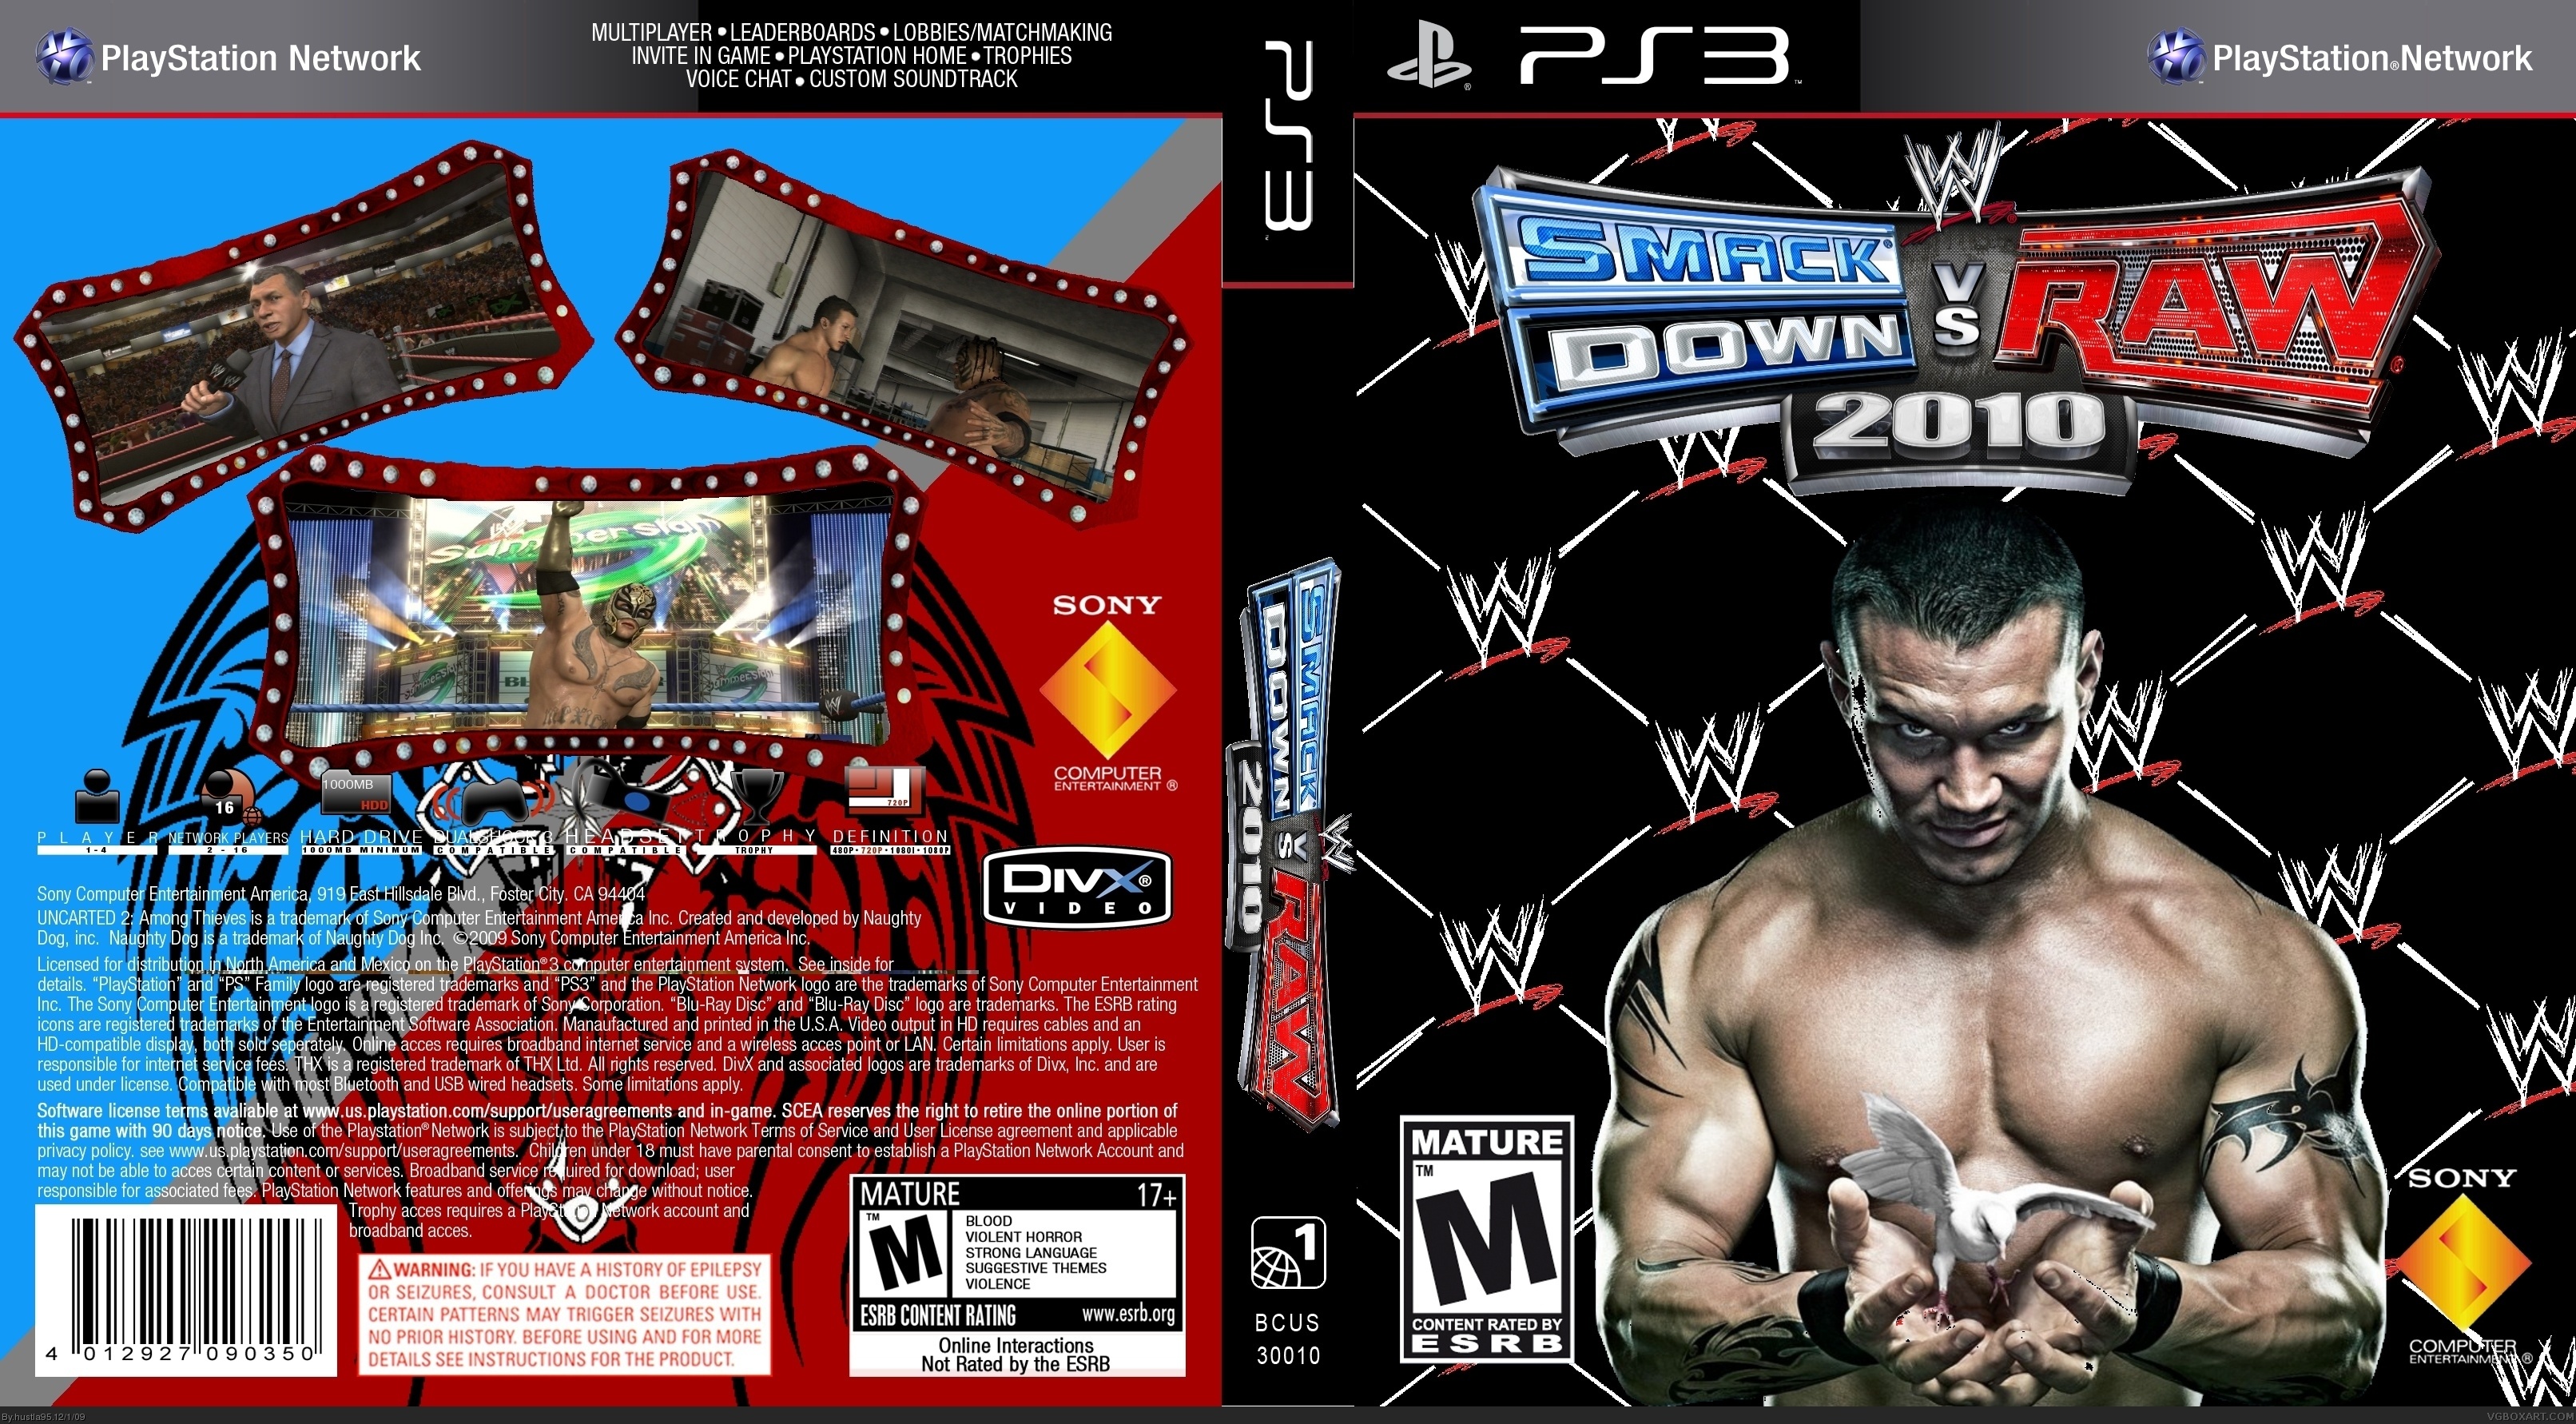 WWE Smackdown vs RAW 2010 box cover